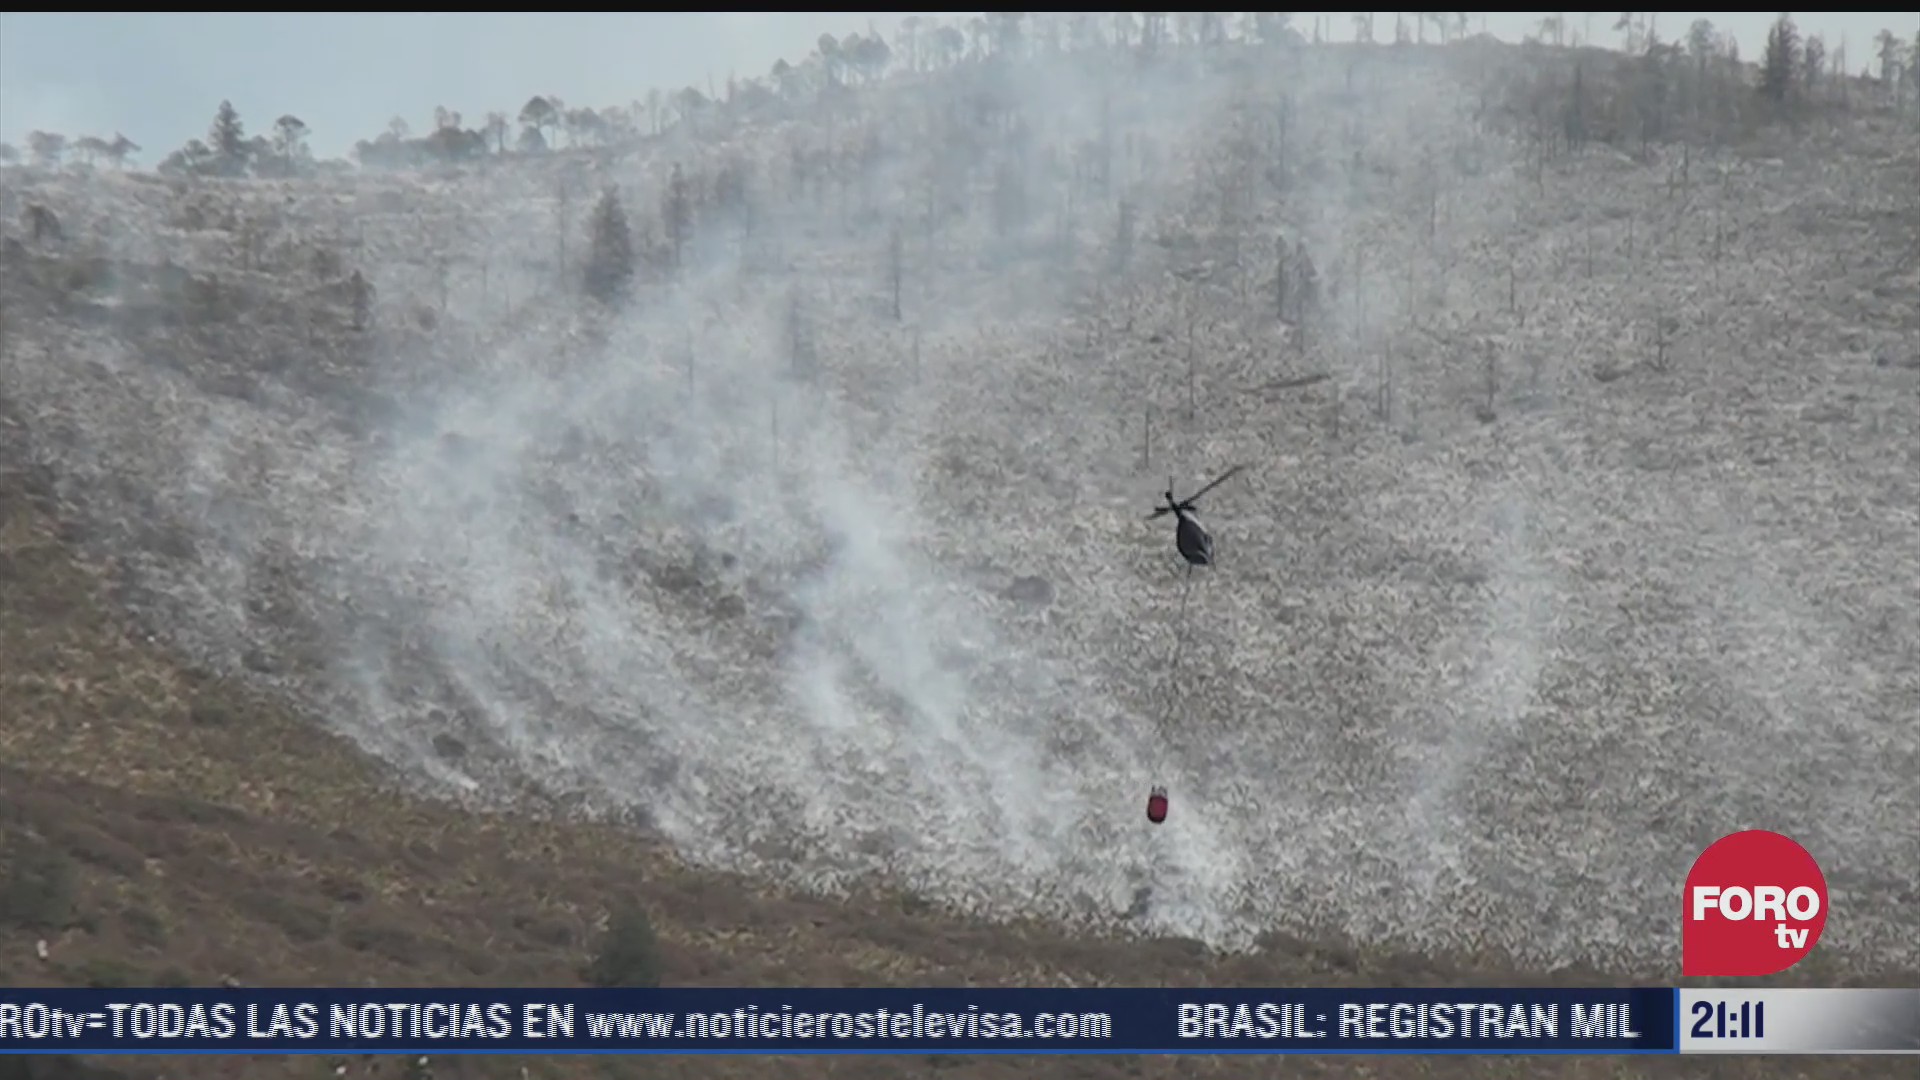 imparable el incendio forestal en arteaga coahuila